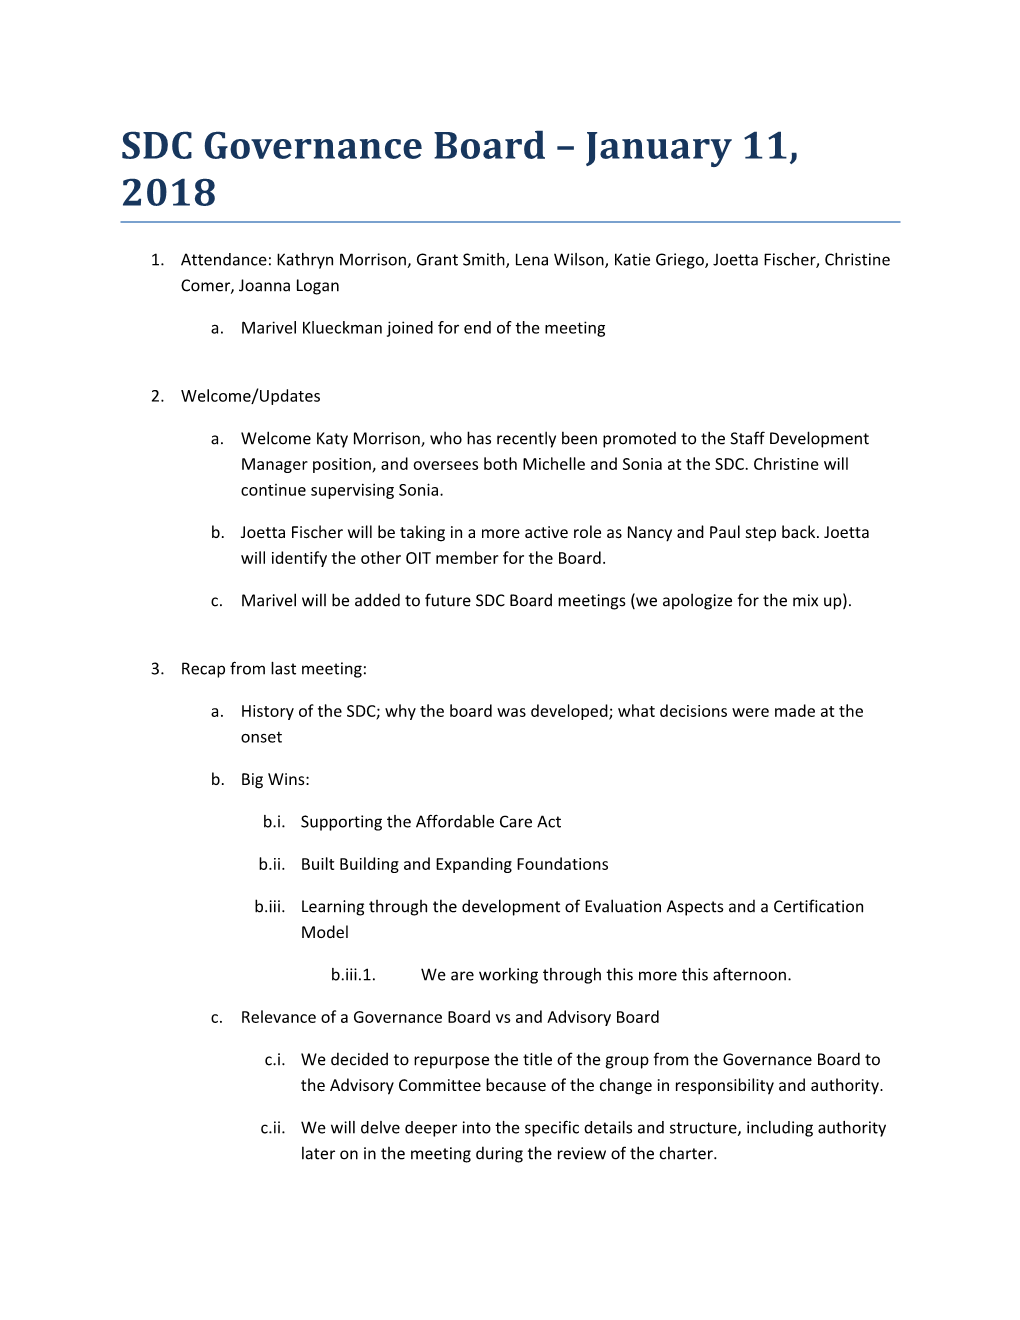 SDC Governance Board January 11, 2018